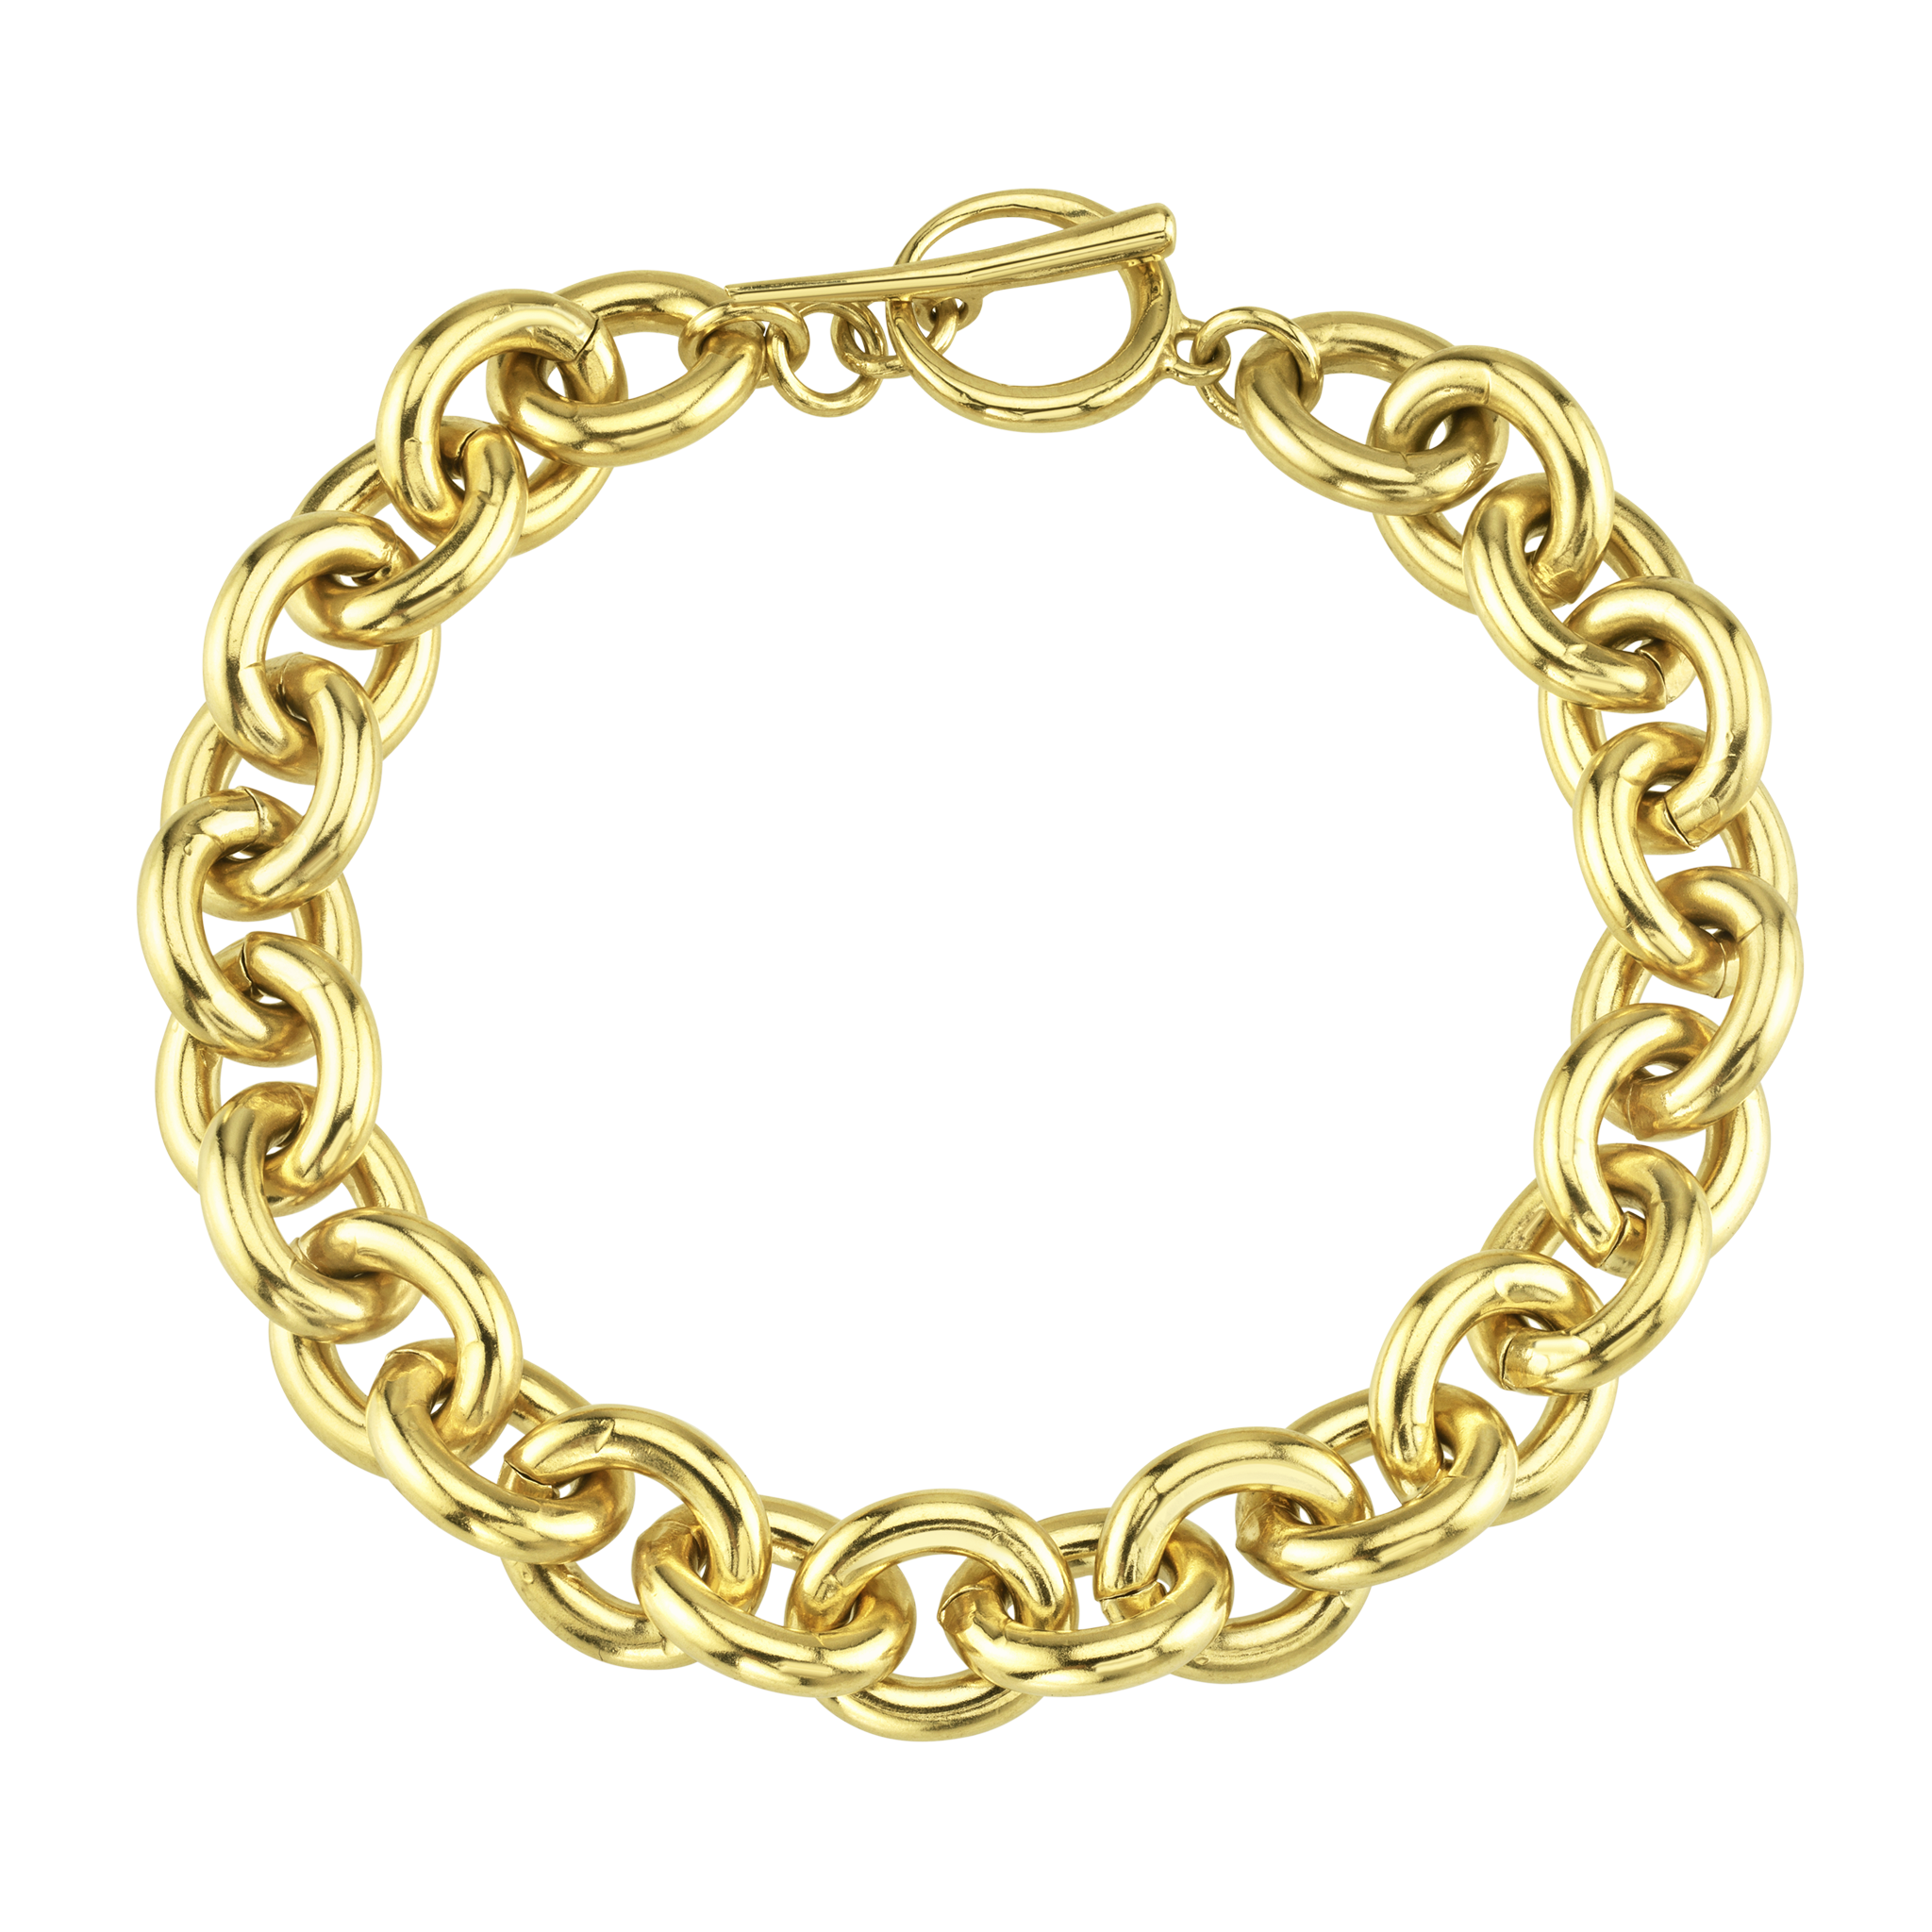 Chain Bracelet with Tusk Clasp - Gabriela Artigas